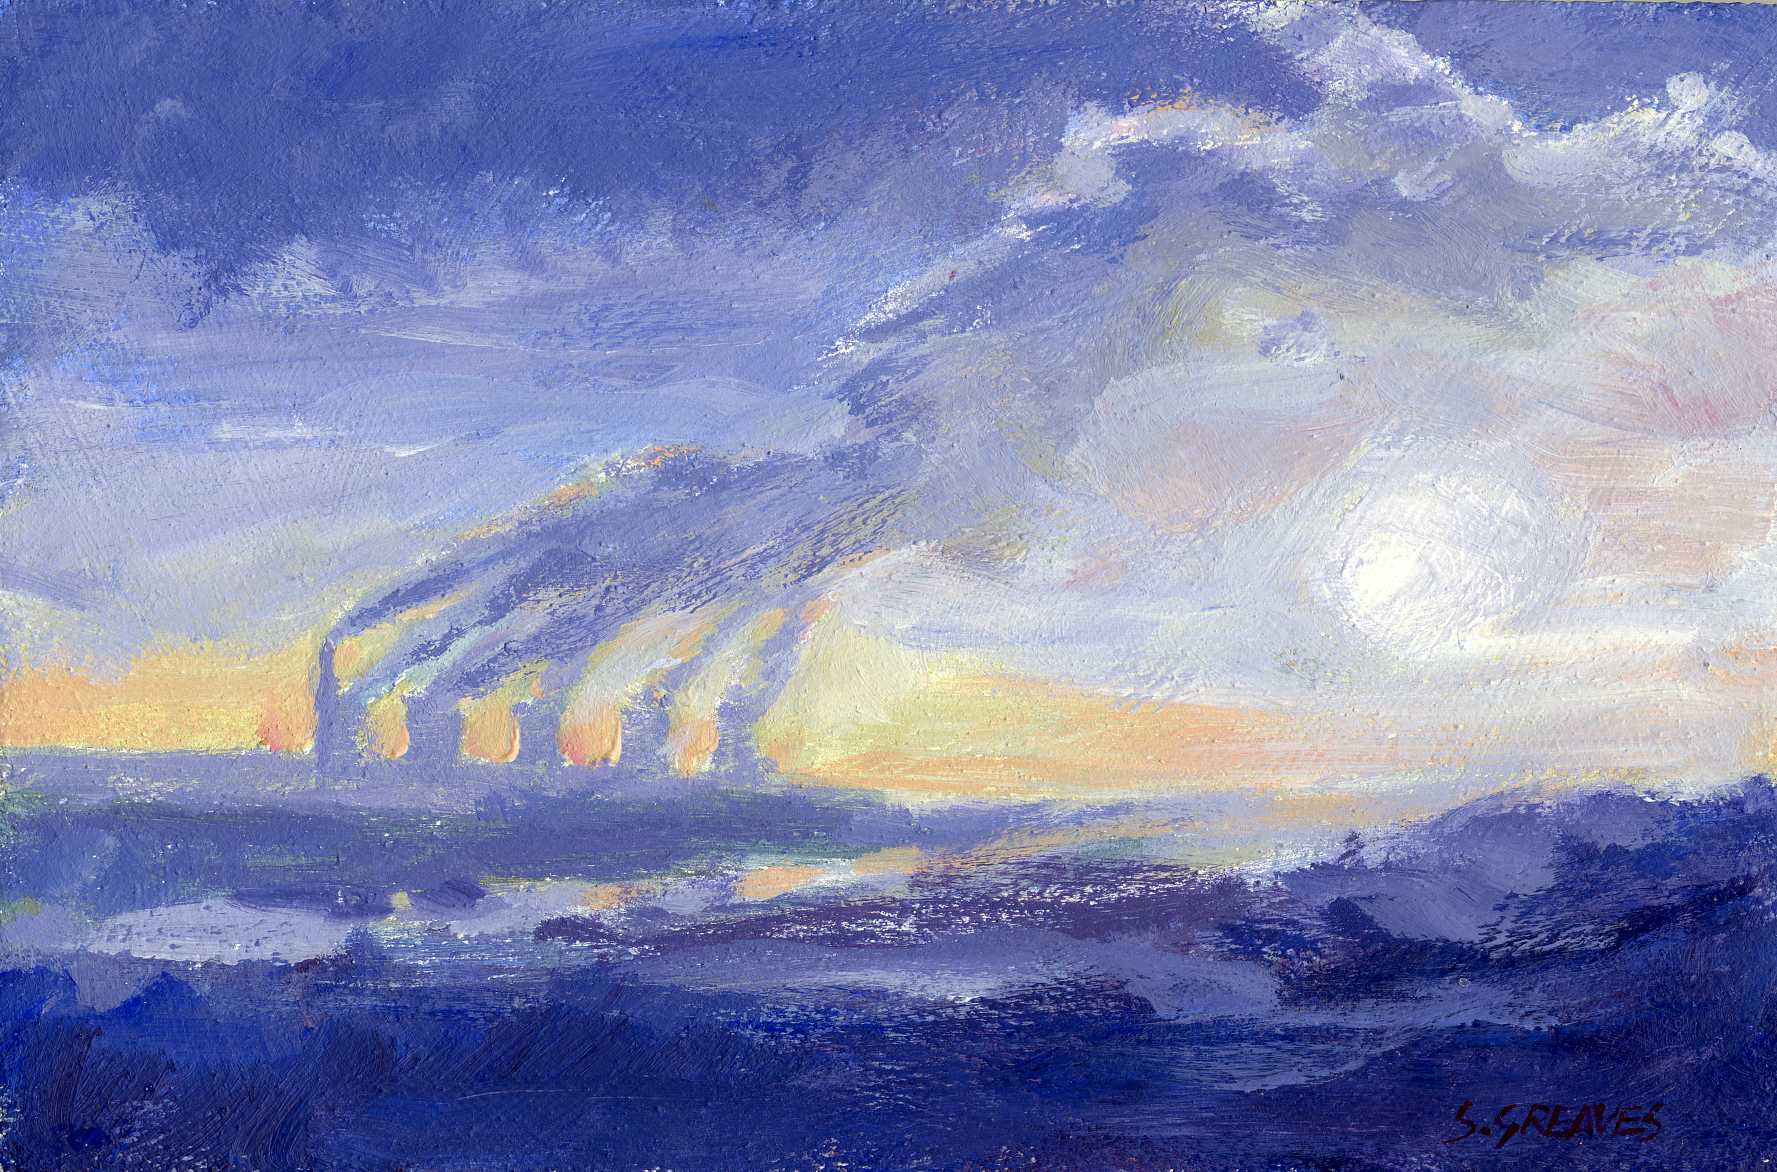 Steve Greaves - Rattcliff-on-Soar Power Station - landscape painting